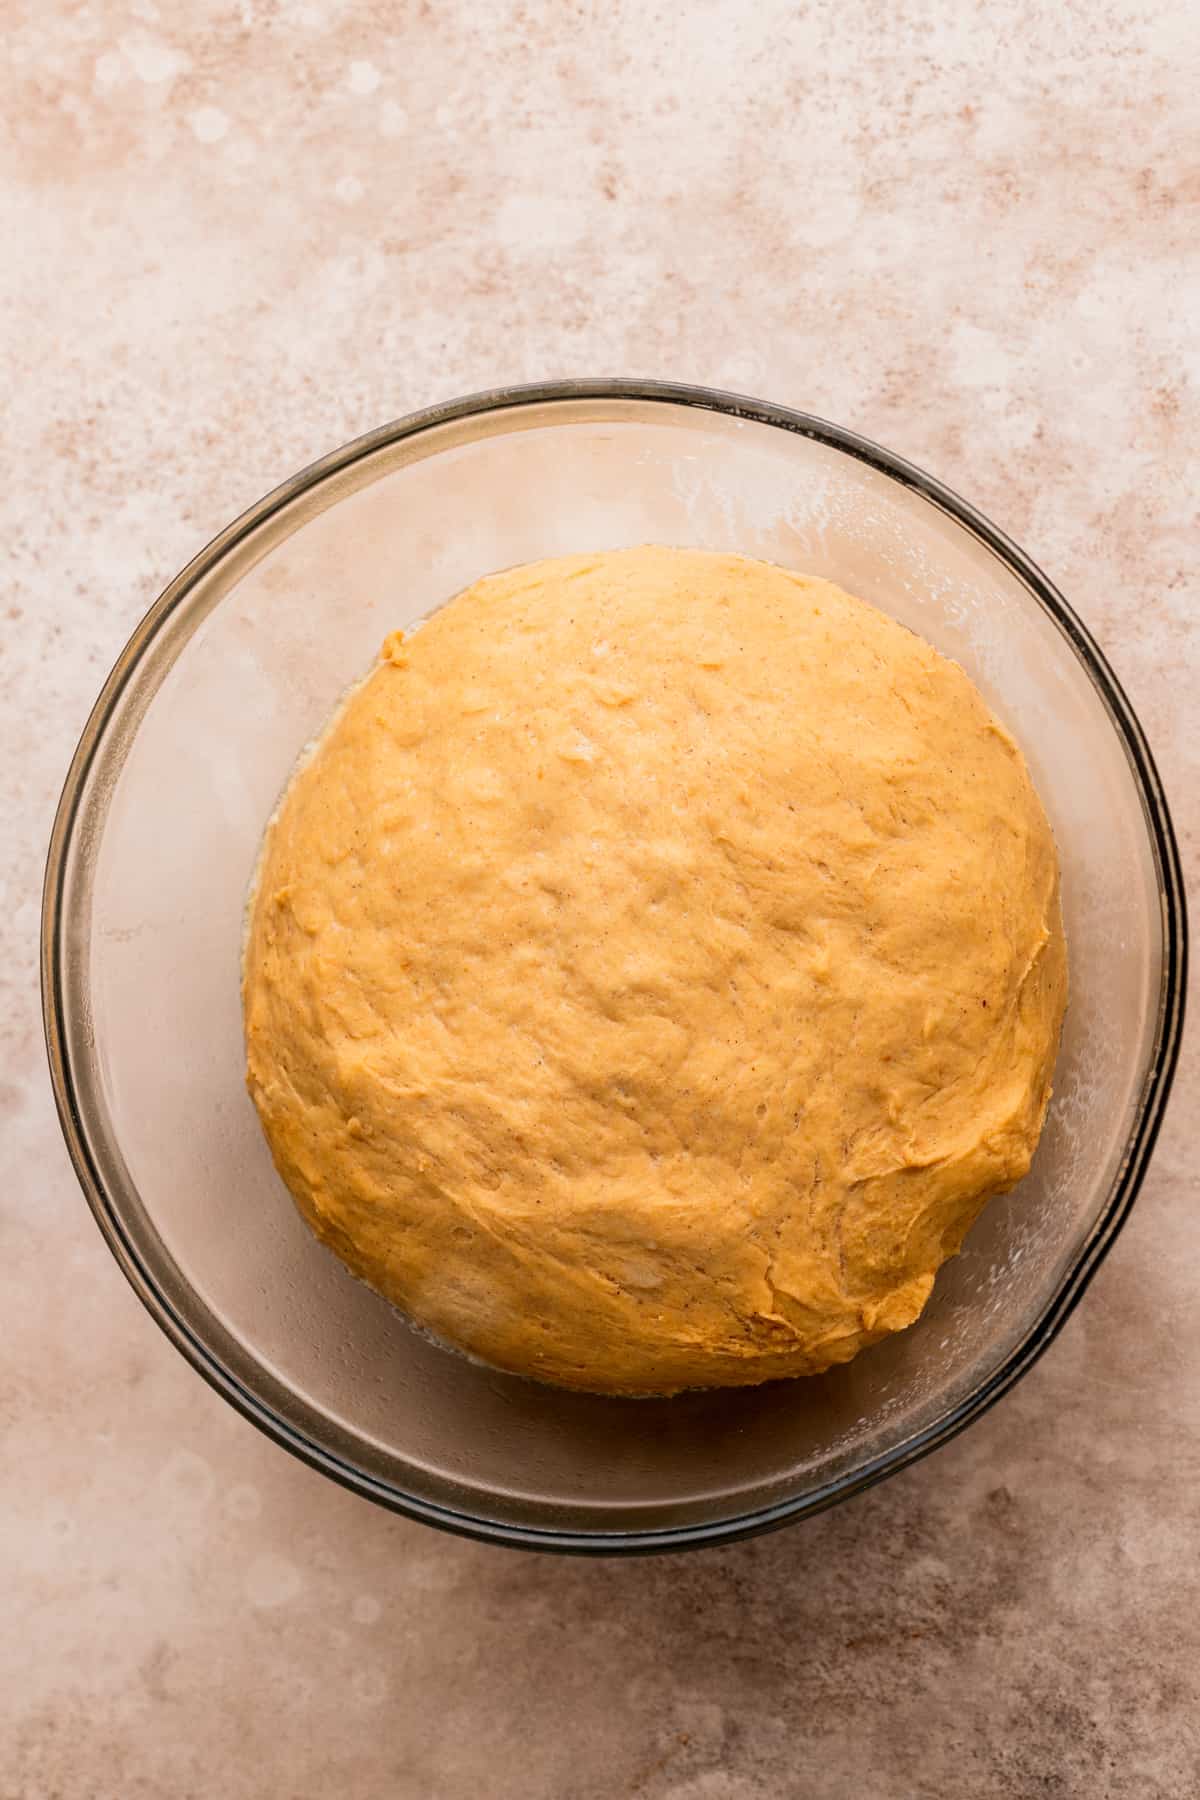 Risen dough in a glass bowl.